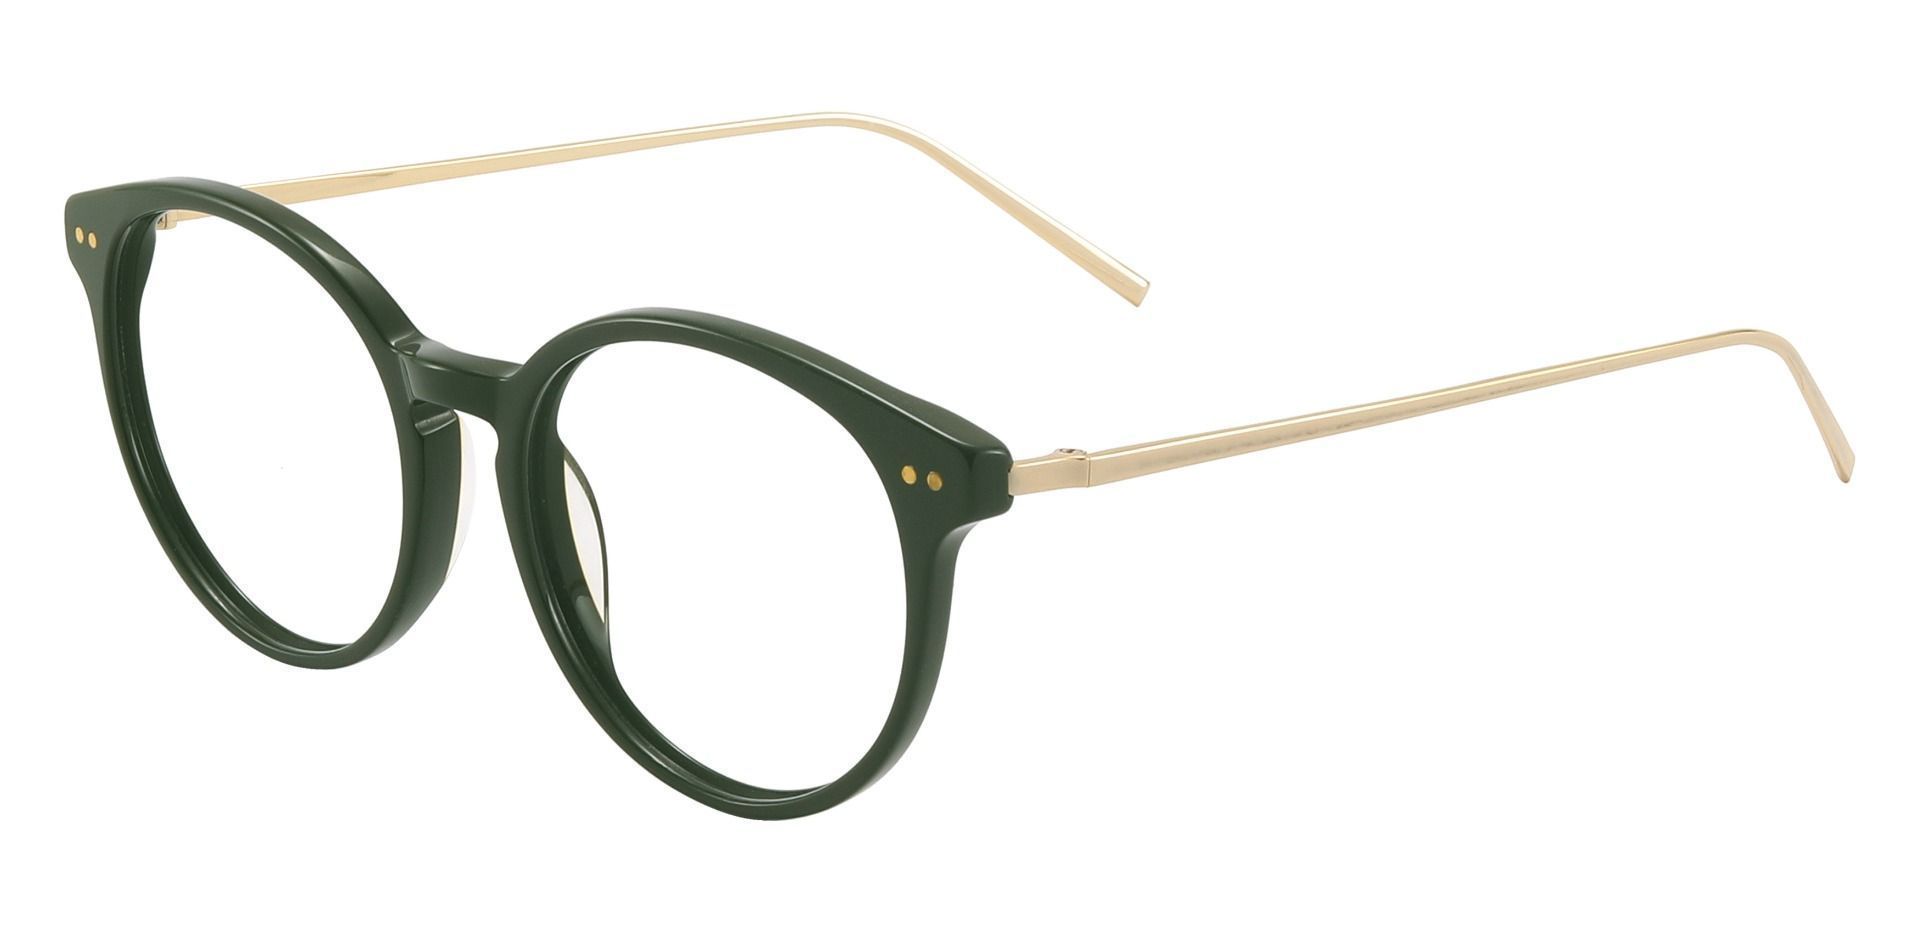 Beltran Round Prescription Glasses - Green